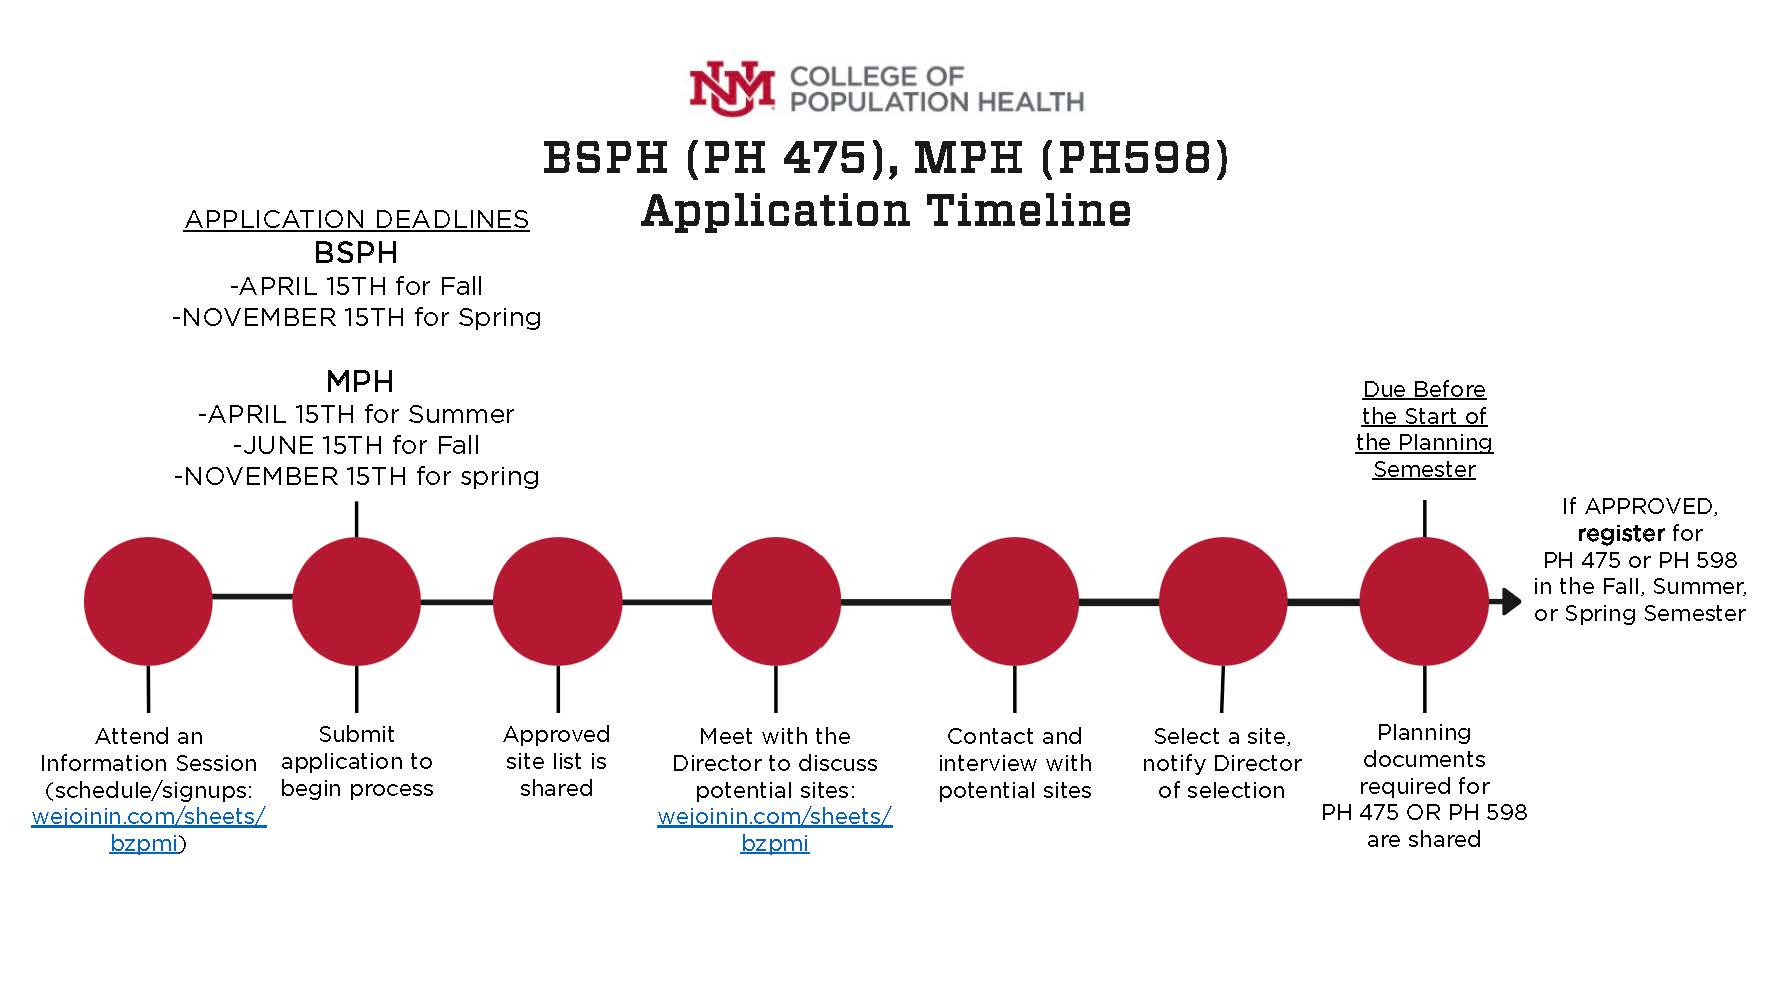 График подачи заявок на получение степени магистра BSPH до 2023 г.